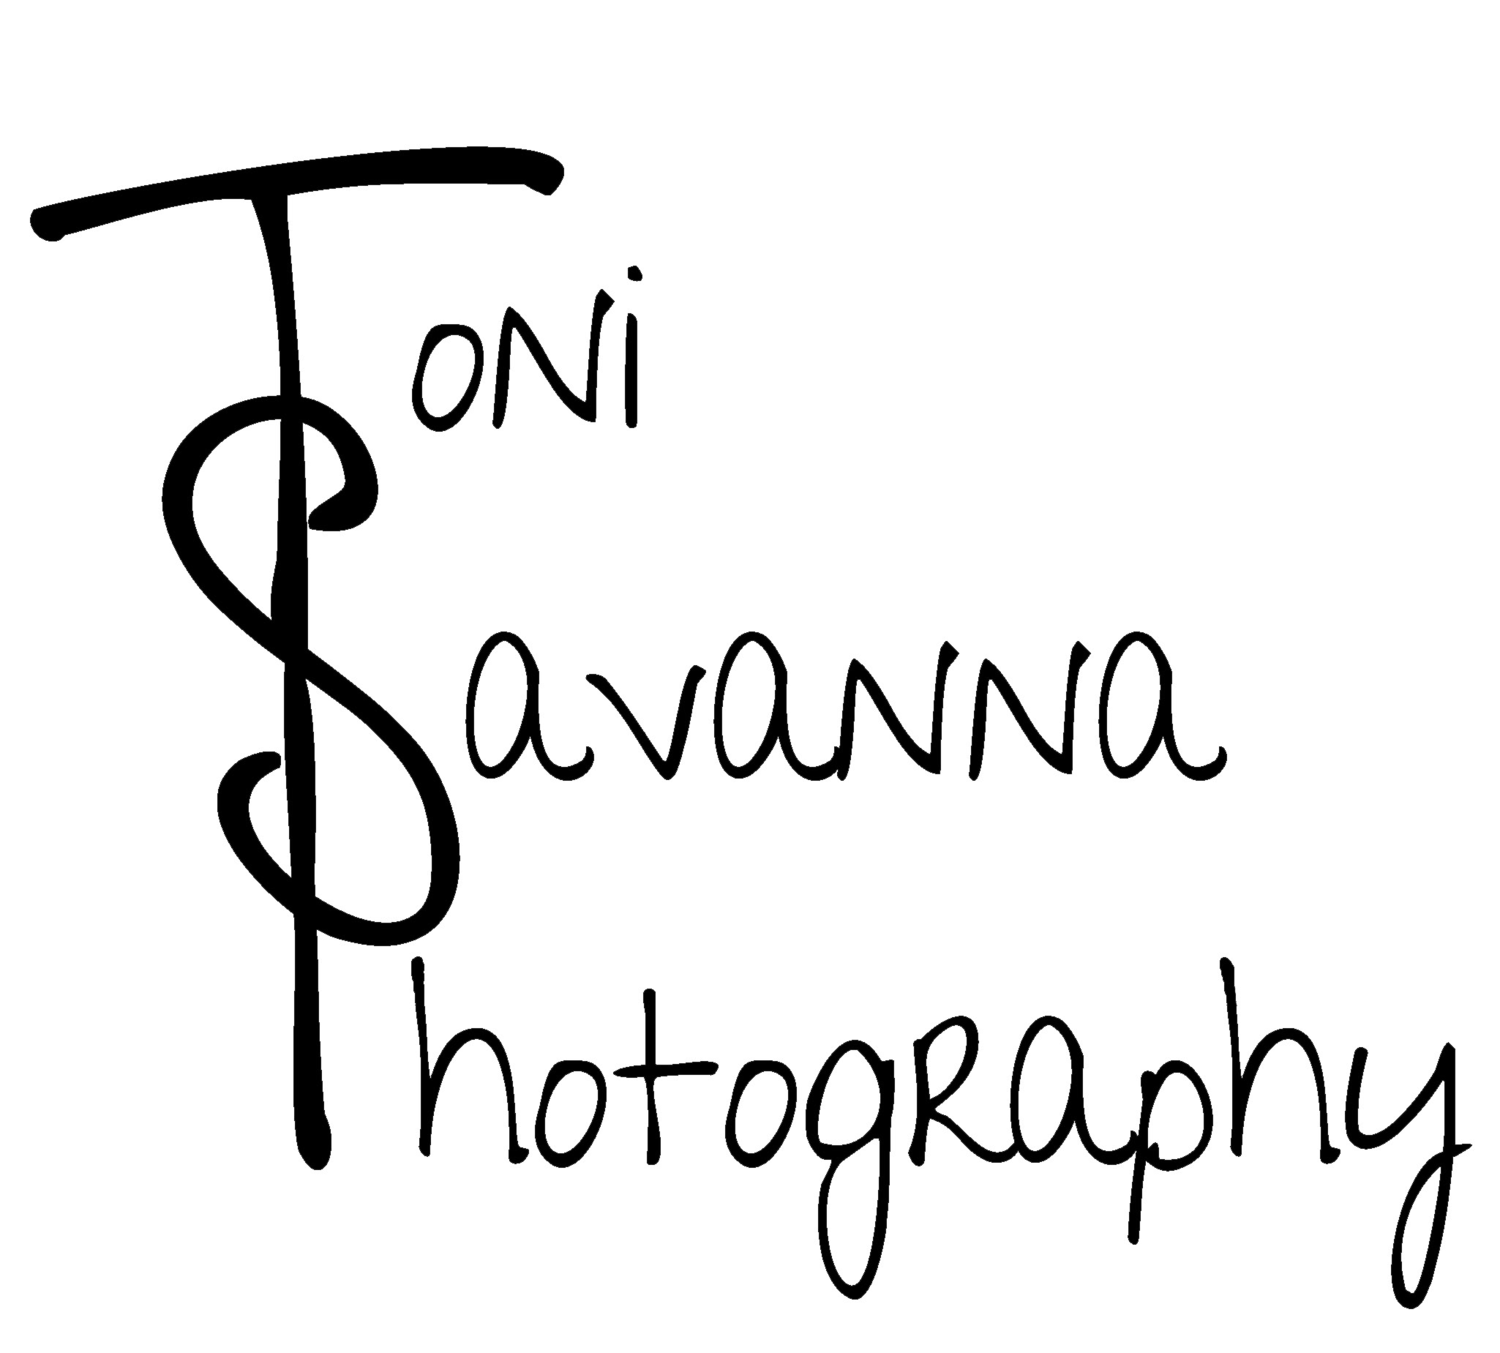 Toni Savanna Photography